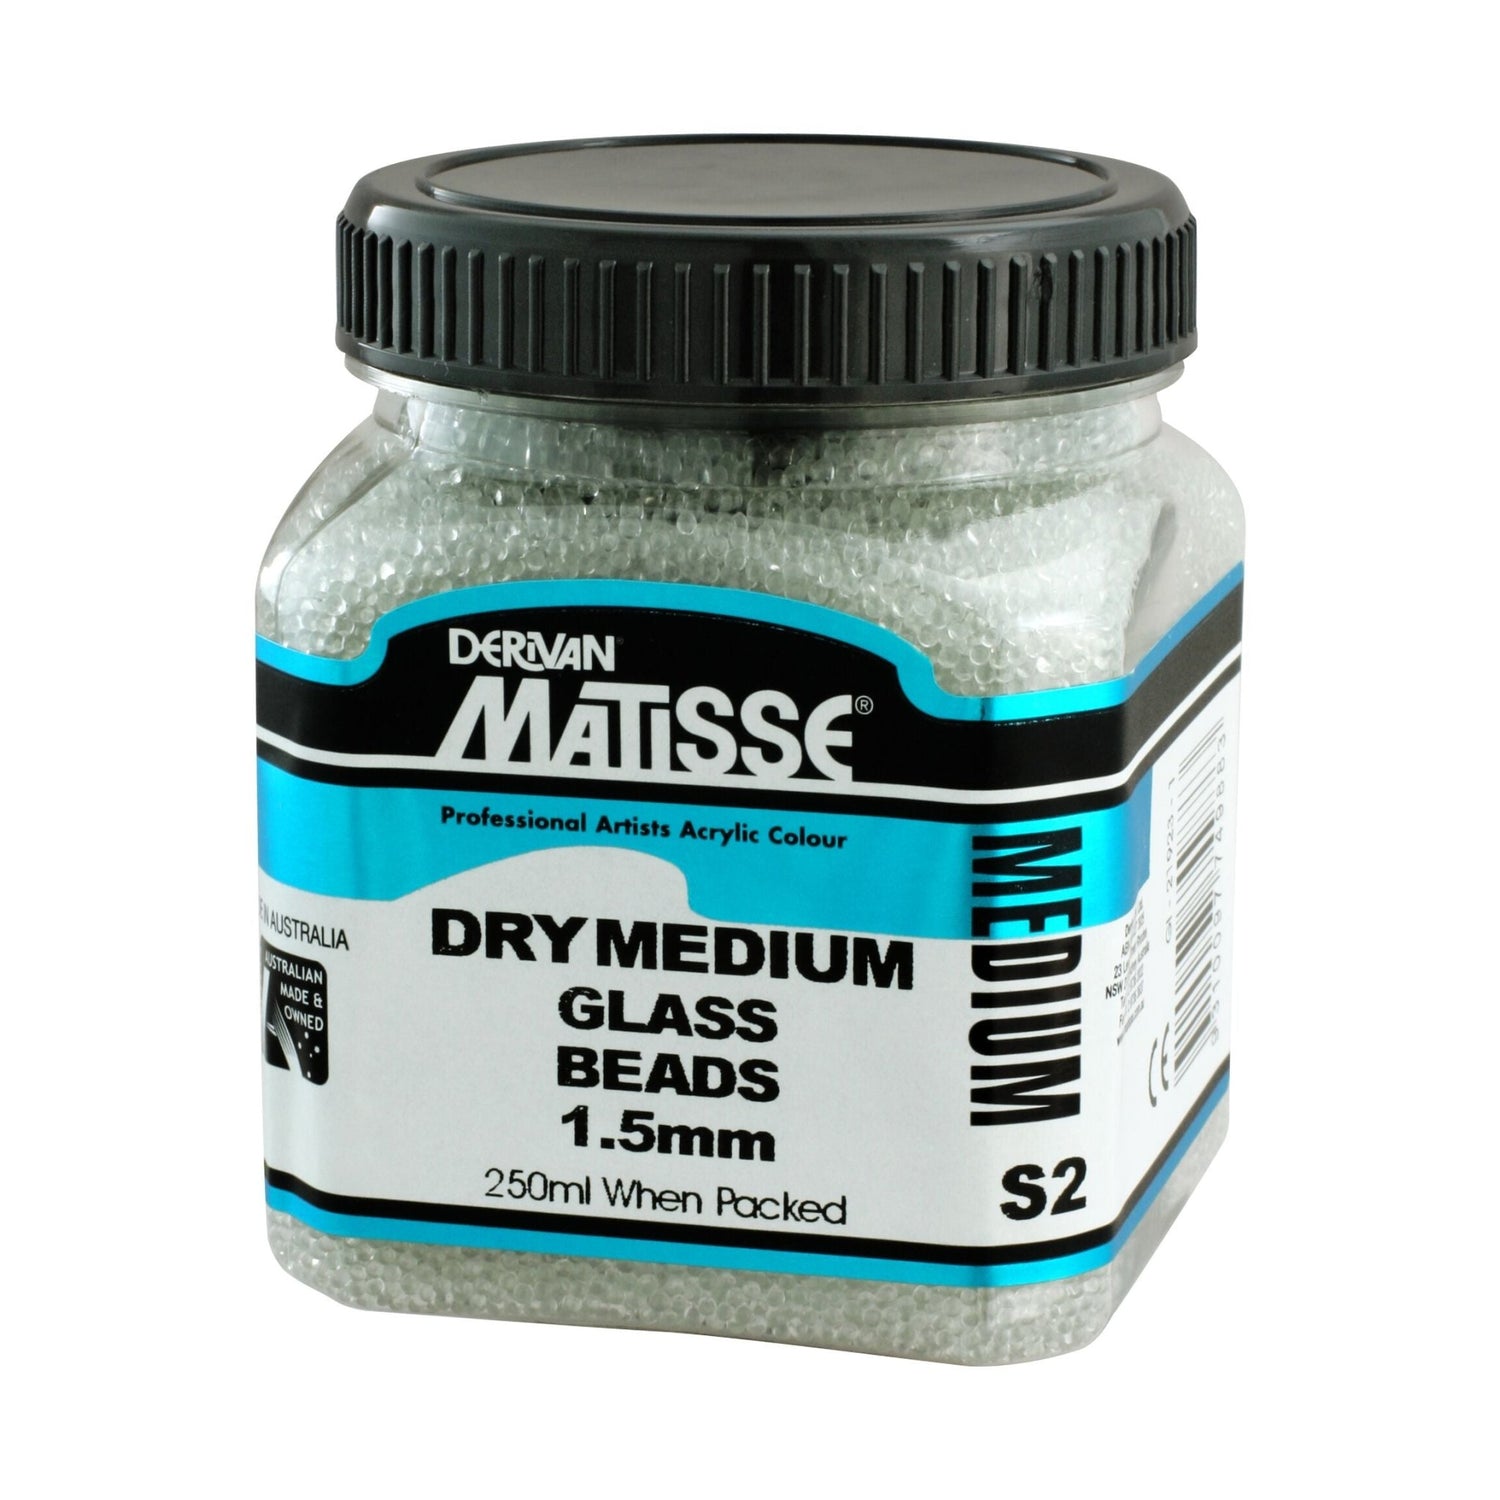 Matisse Dry Medium 250ml Glass Beads 1.5mm - theartshop.com.au